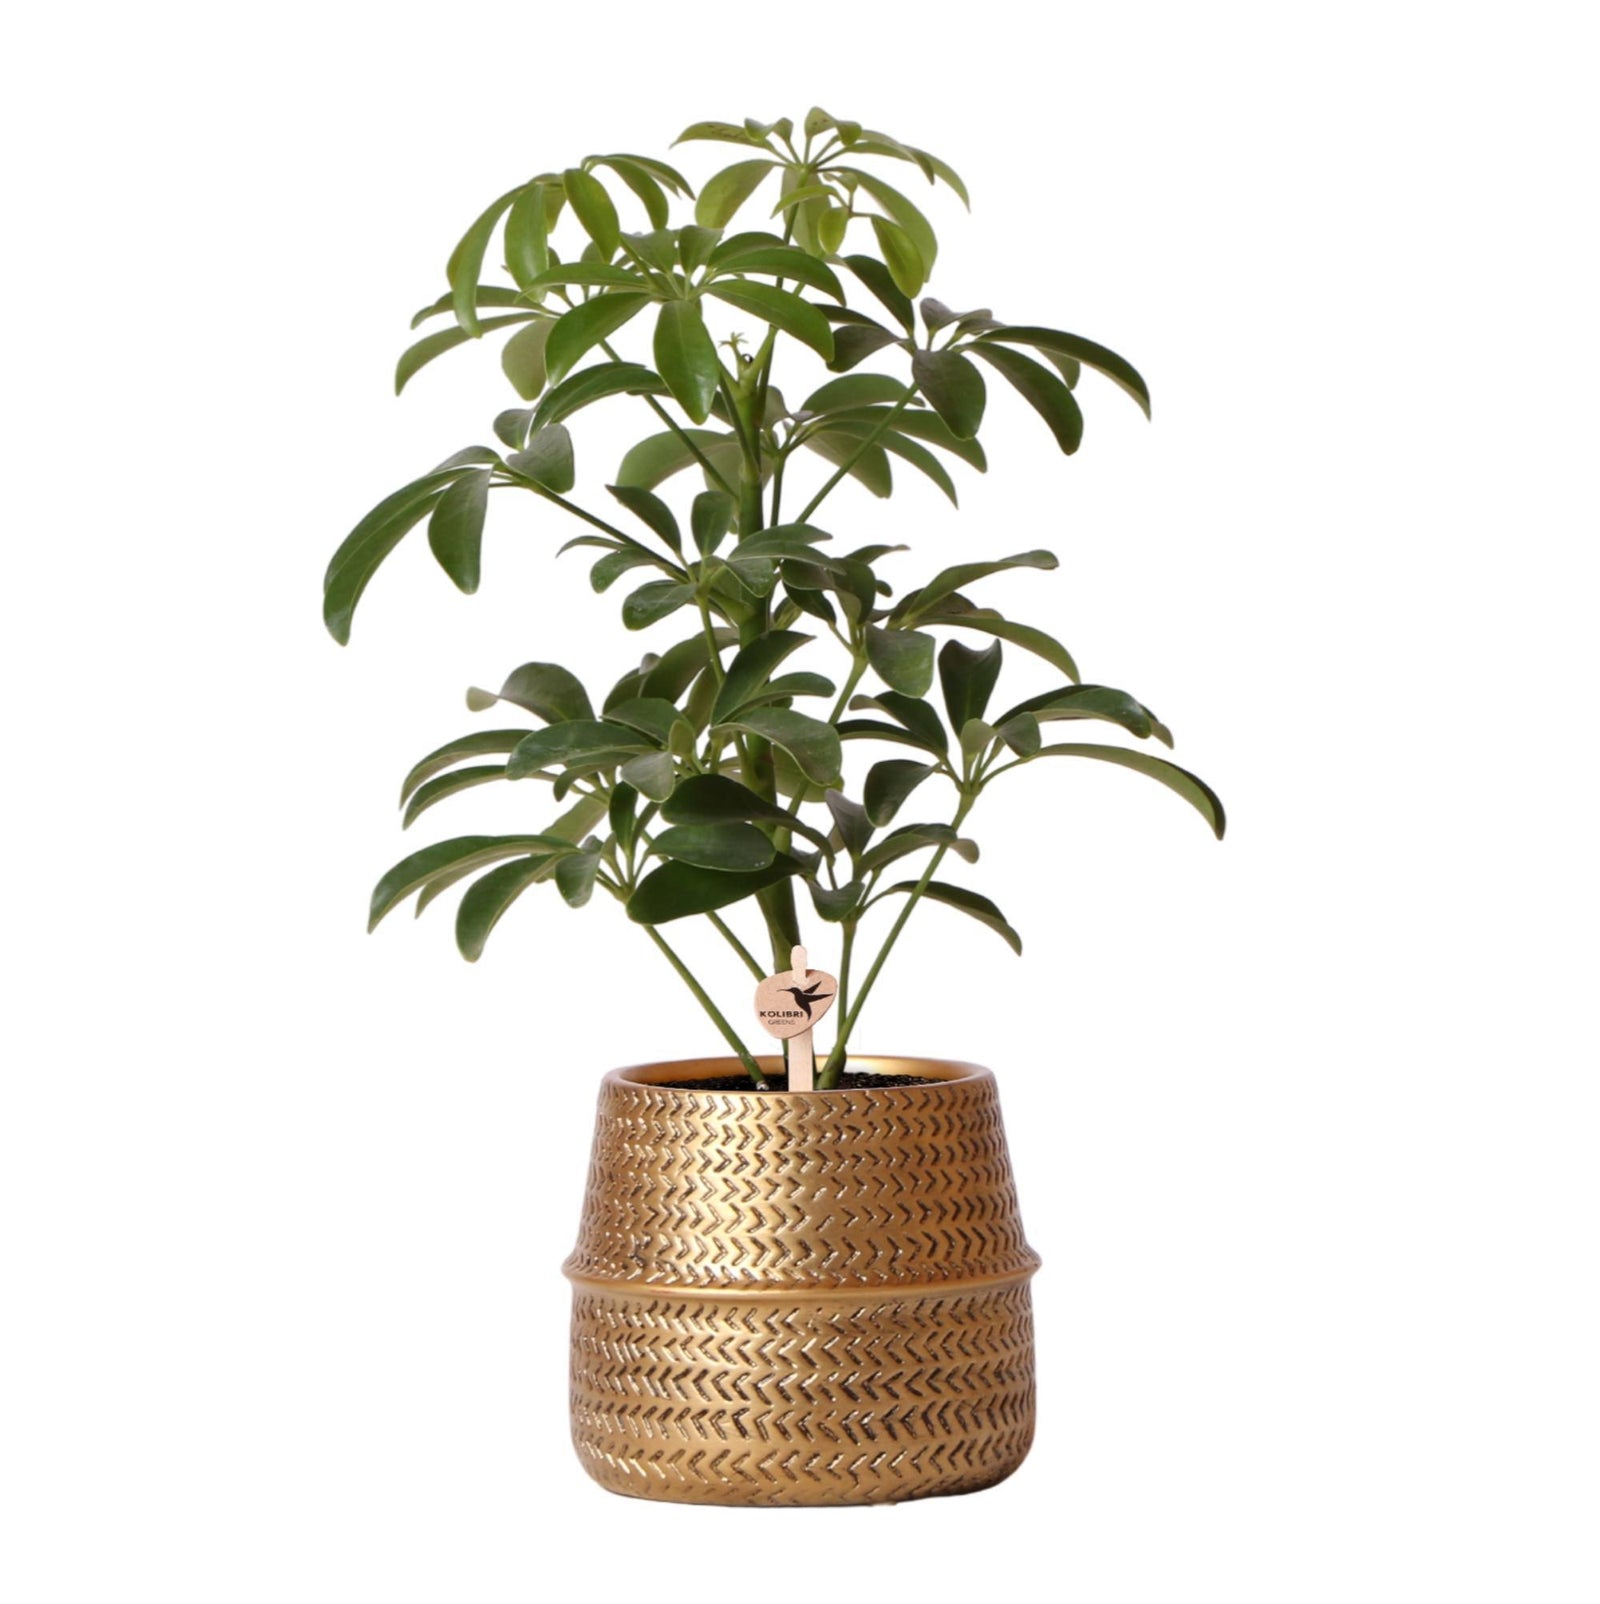 Kolibri Greens | Groene plant - Schefflera Bush in Groove pot goud - potmaat Ø9cm - groene kamerplant - vers van de kweker